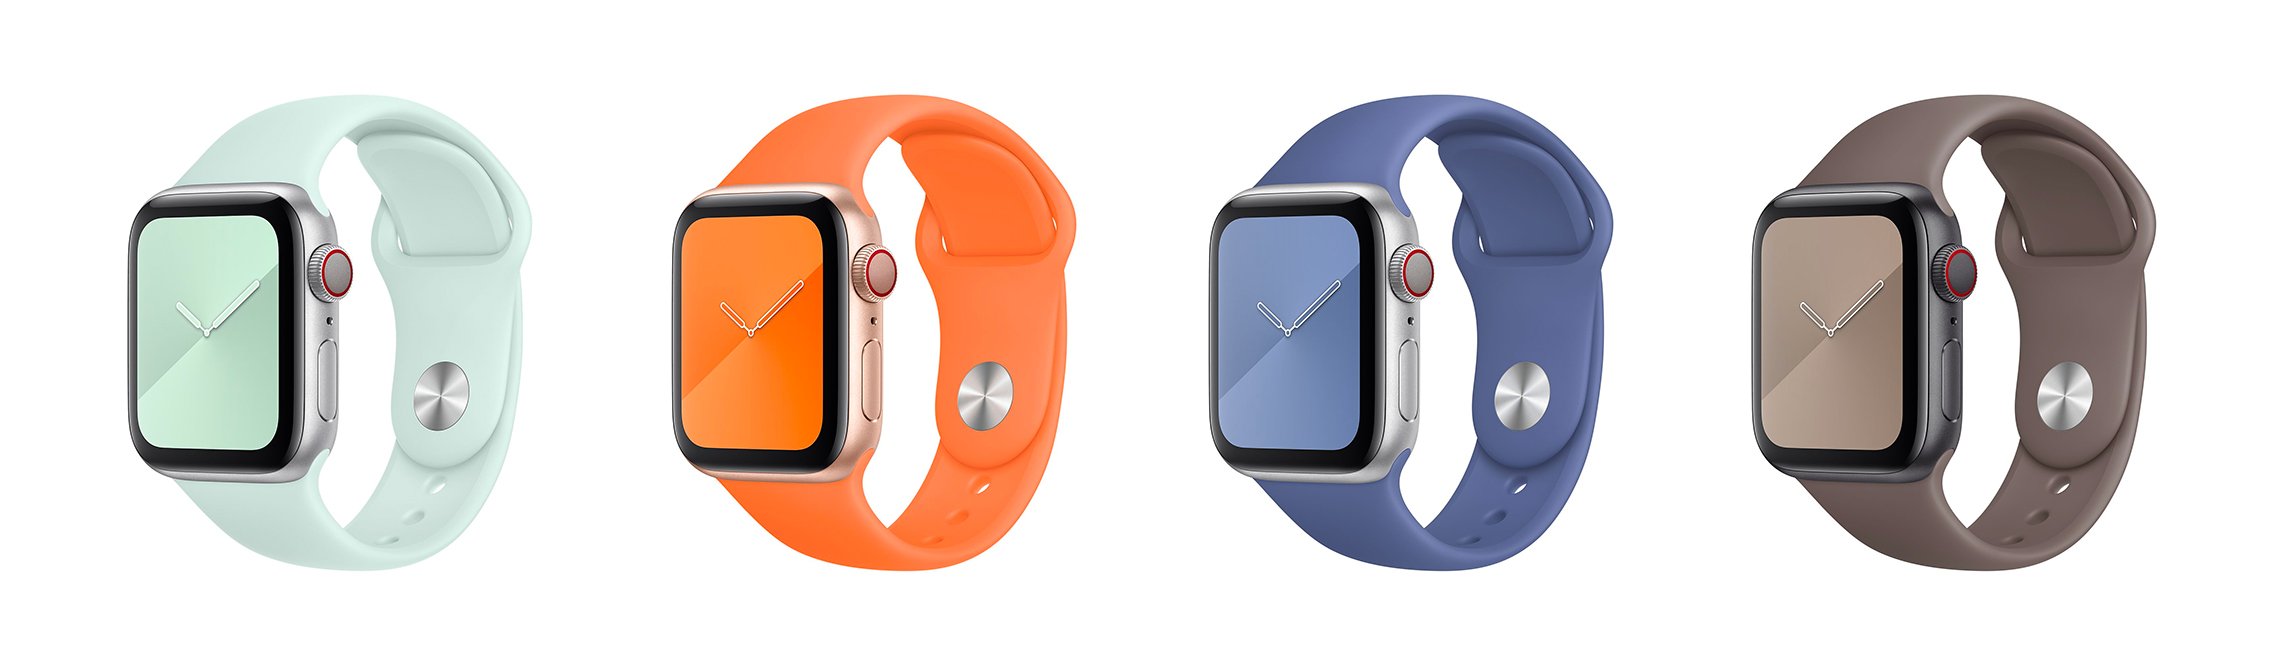 Novas cores de pulseiras esportivas para o Apple Watch lançadas nesta semana.